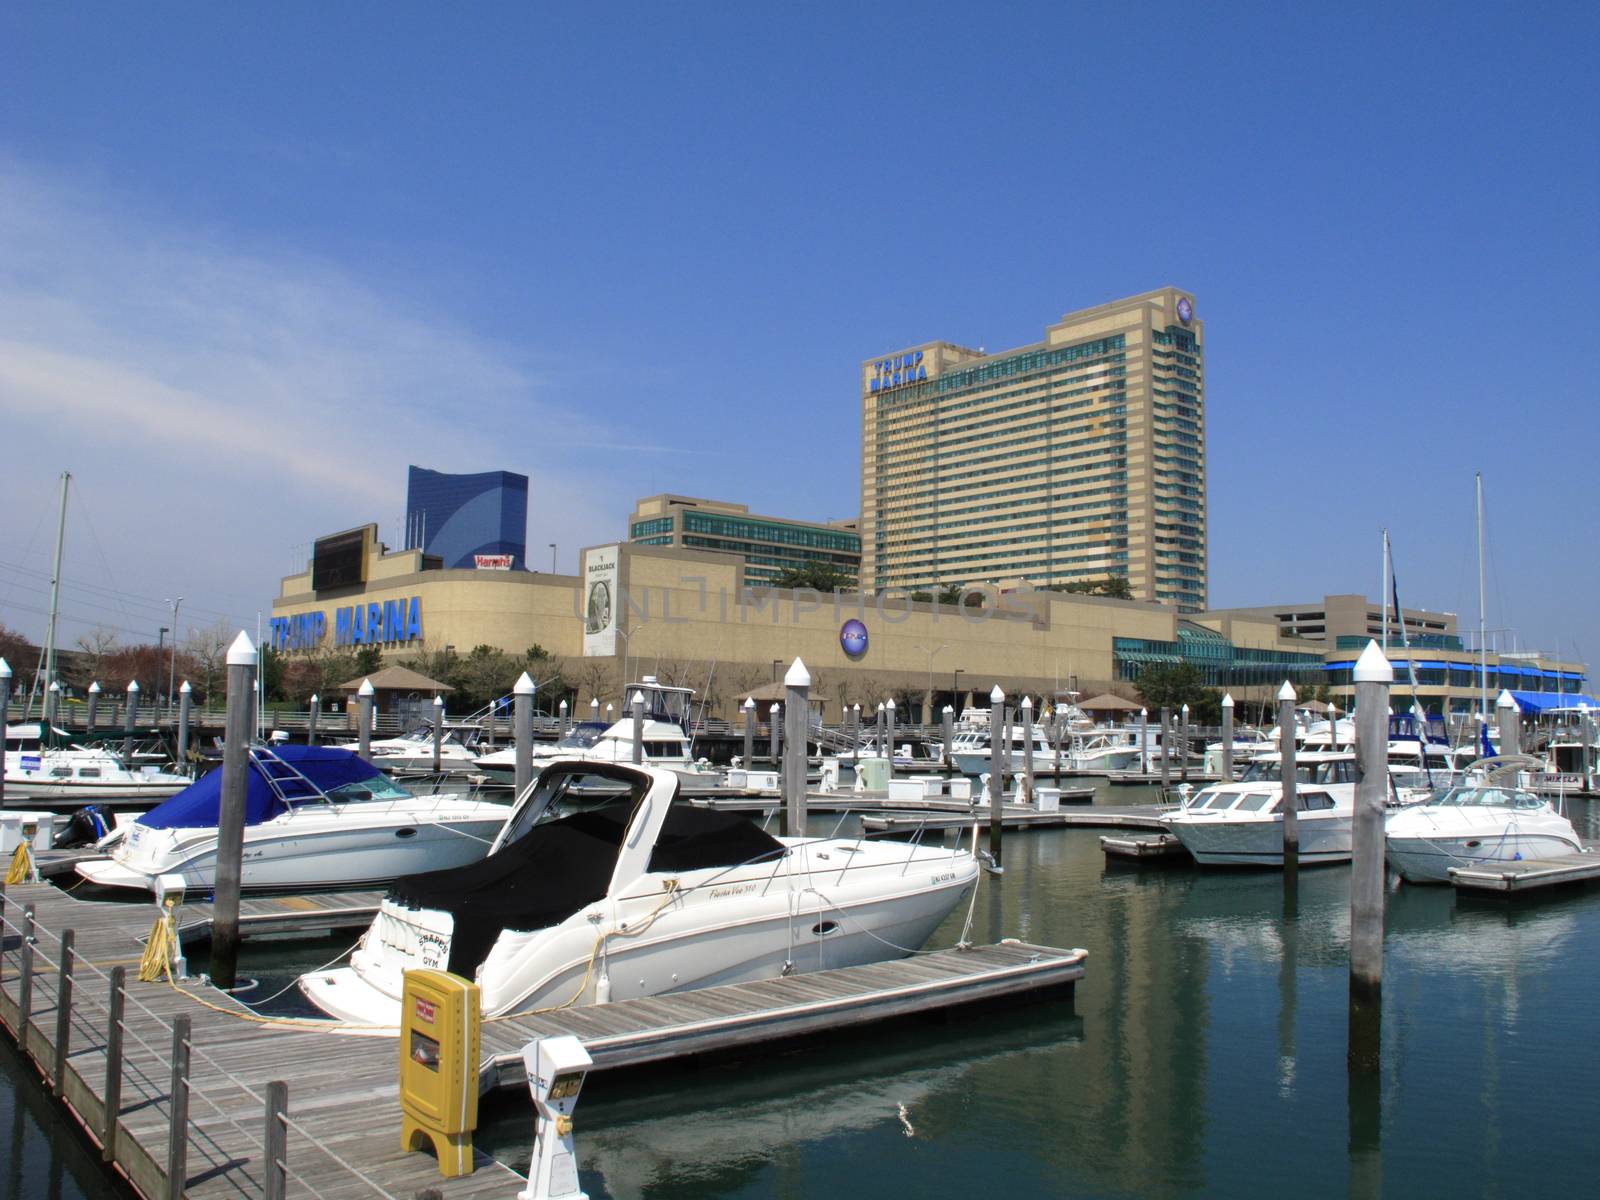 Trump Marina Hotel - Atlantic City by Ffooter